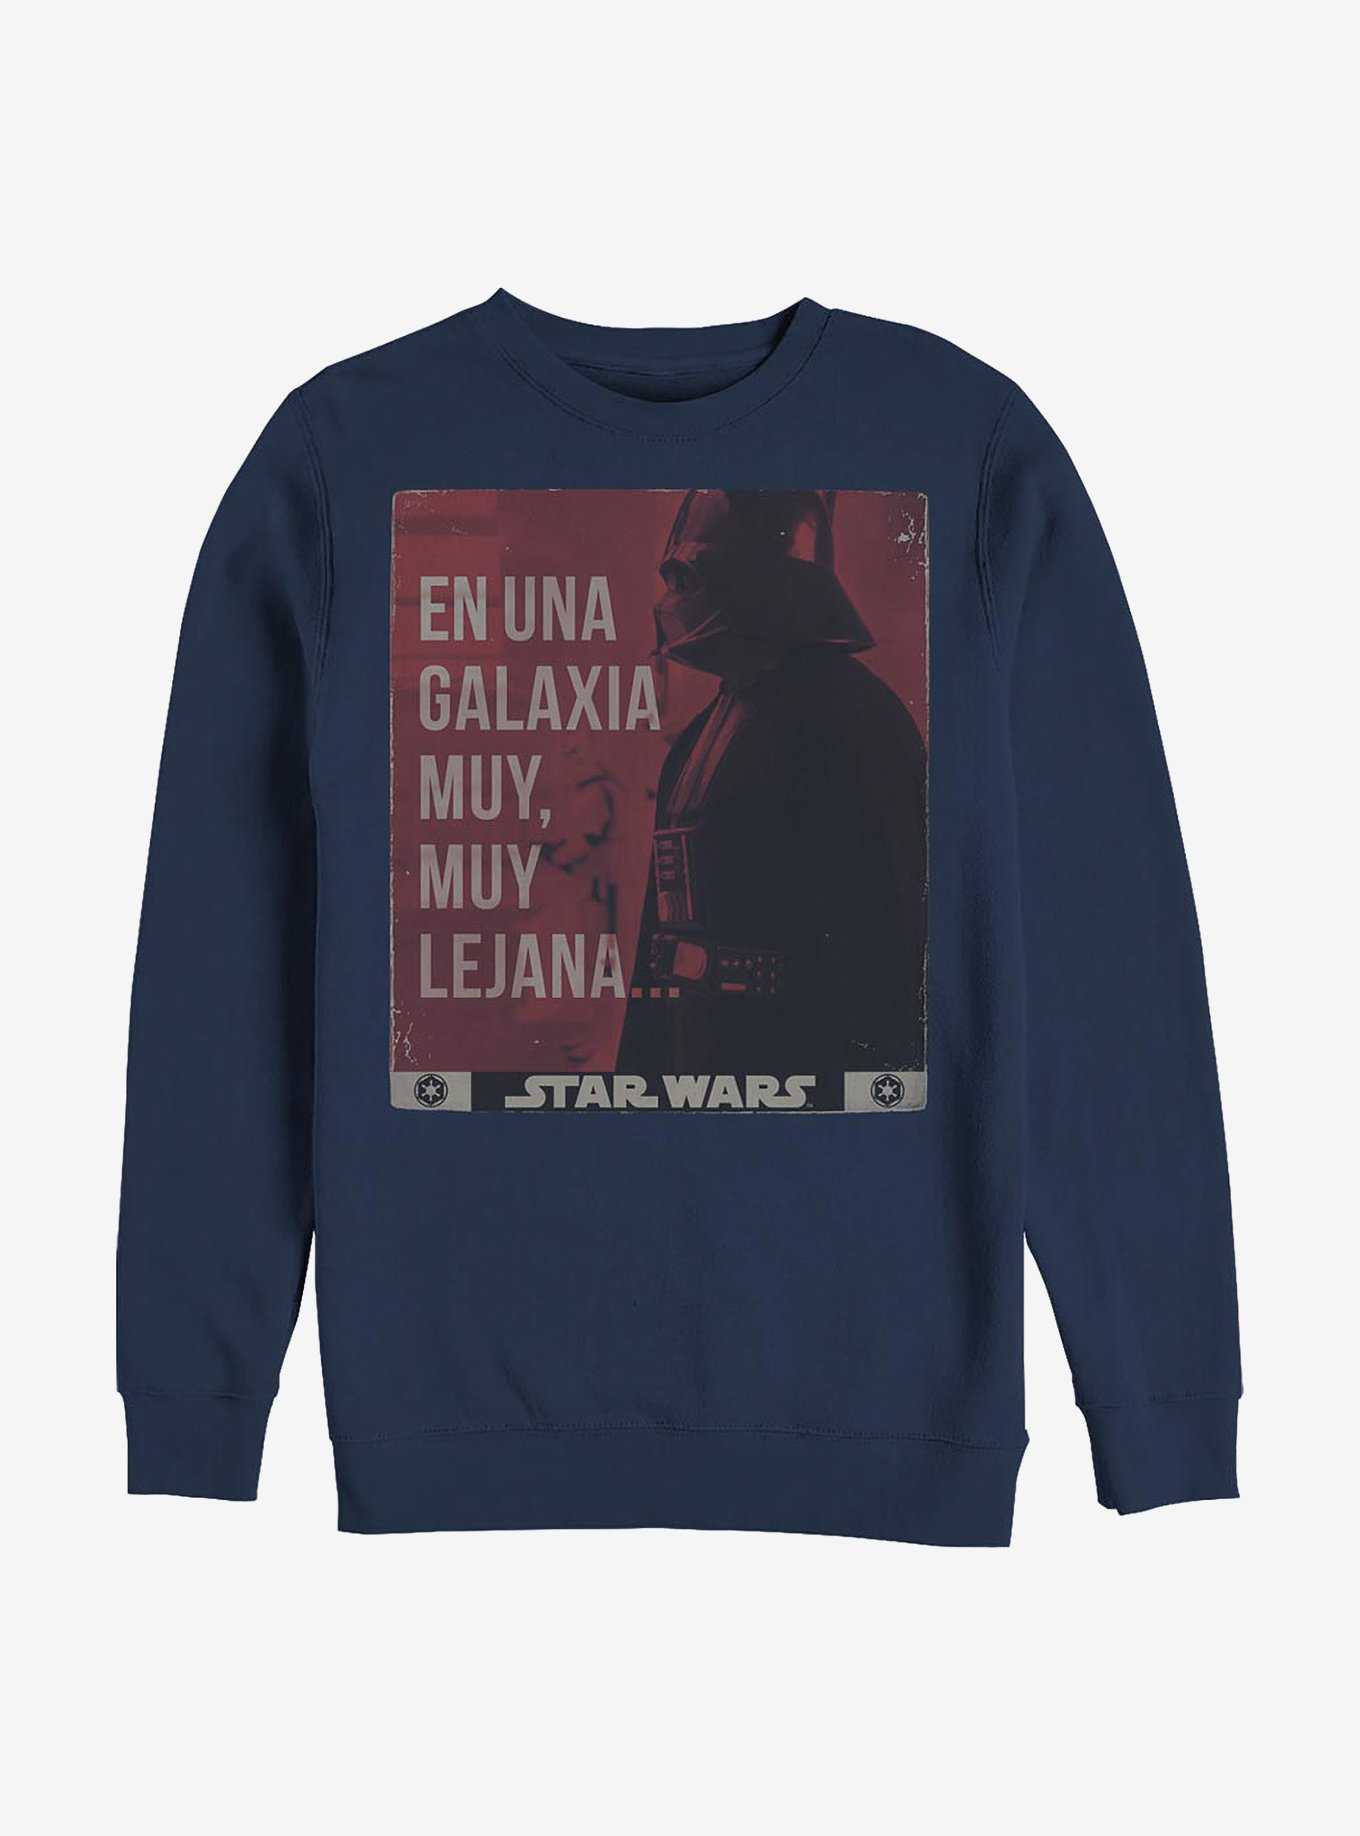 Star Wars Una Galaxia Crew Sweatshirt, , hi-res